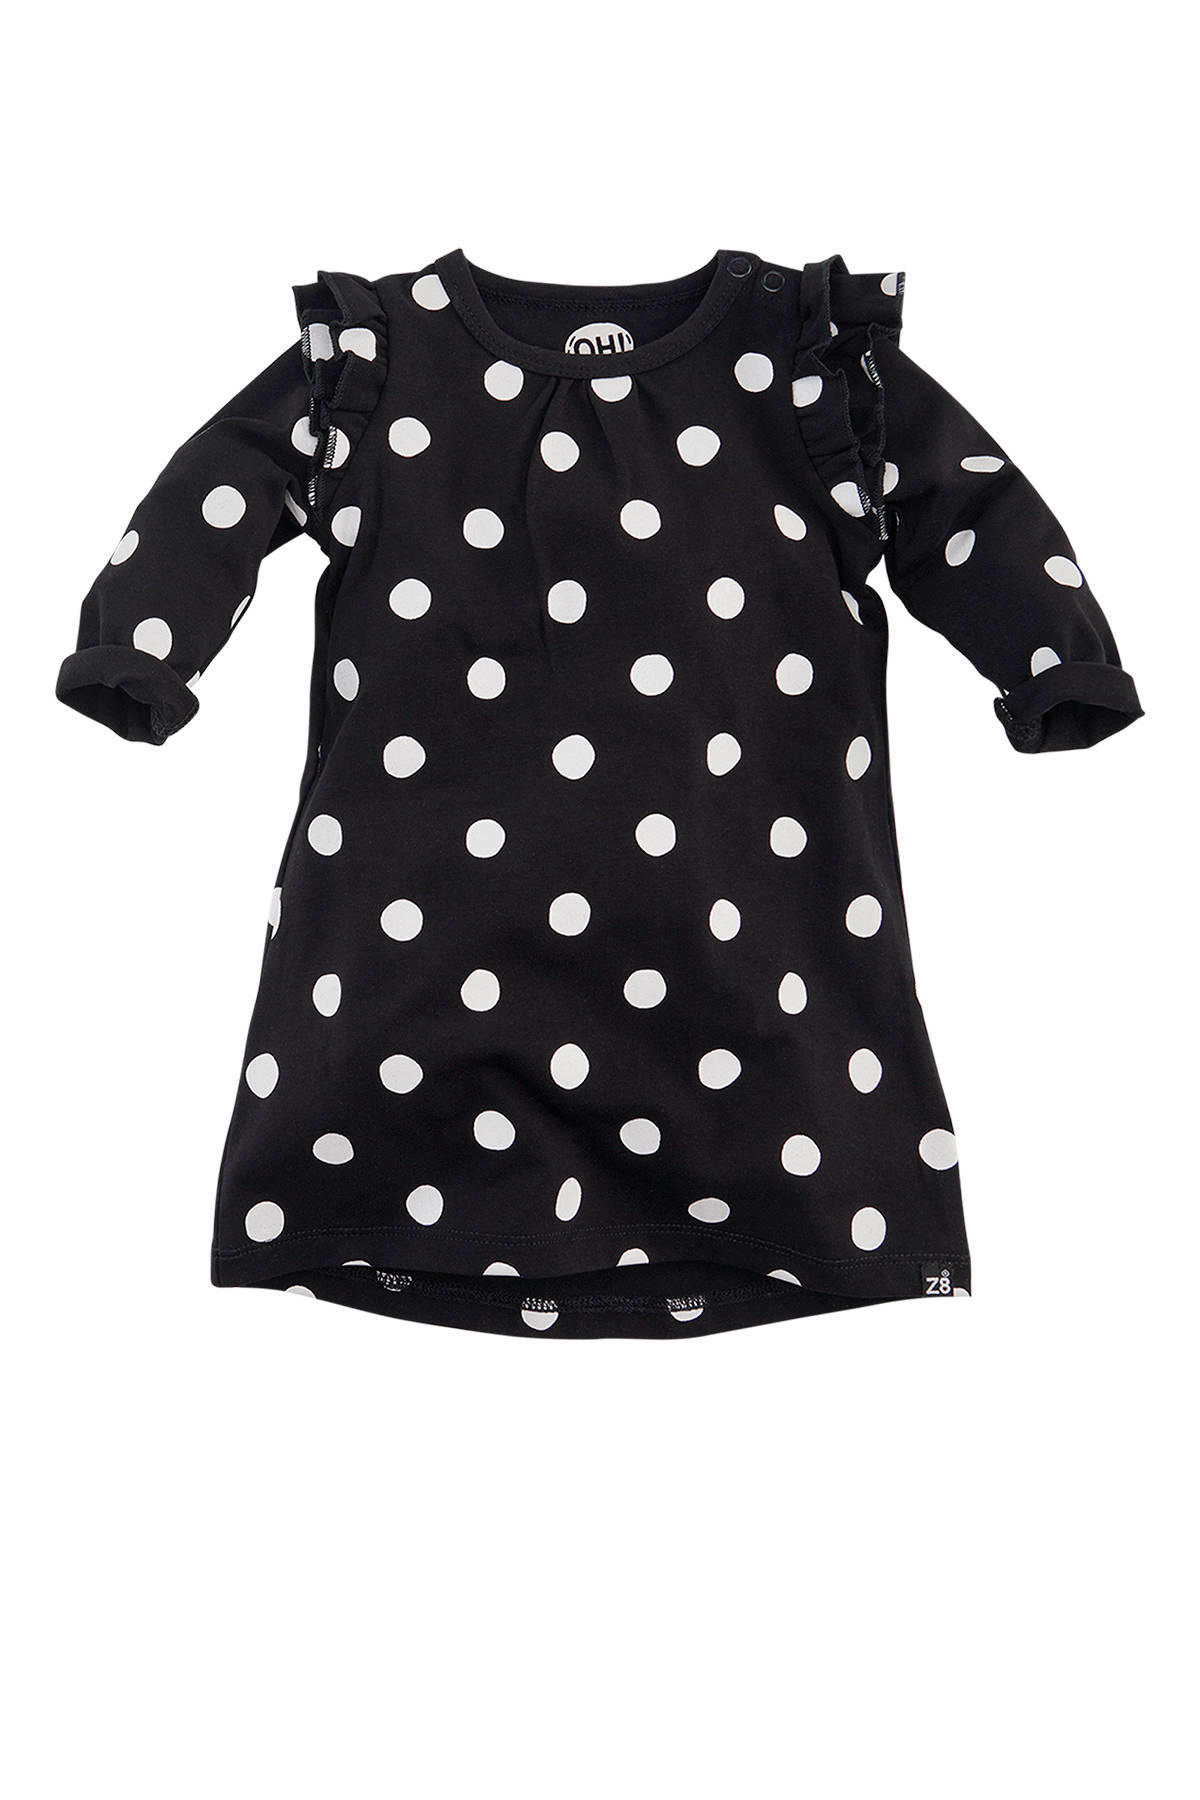 Carrière stimuleren galerij Z8 newborn baby jurk Paris met stippen en ruches zwart/wit | wehkamp